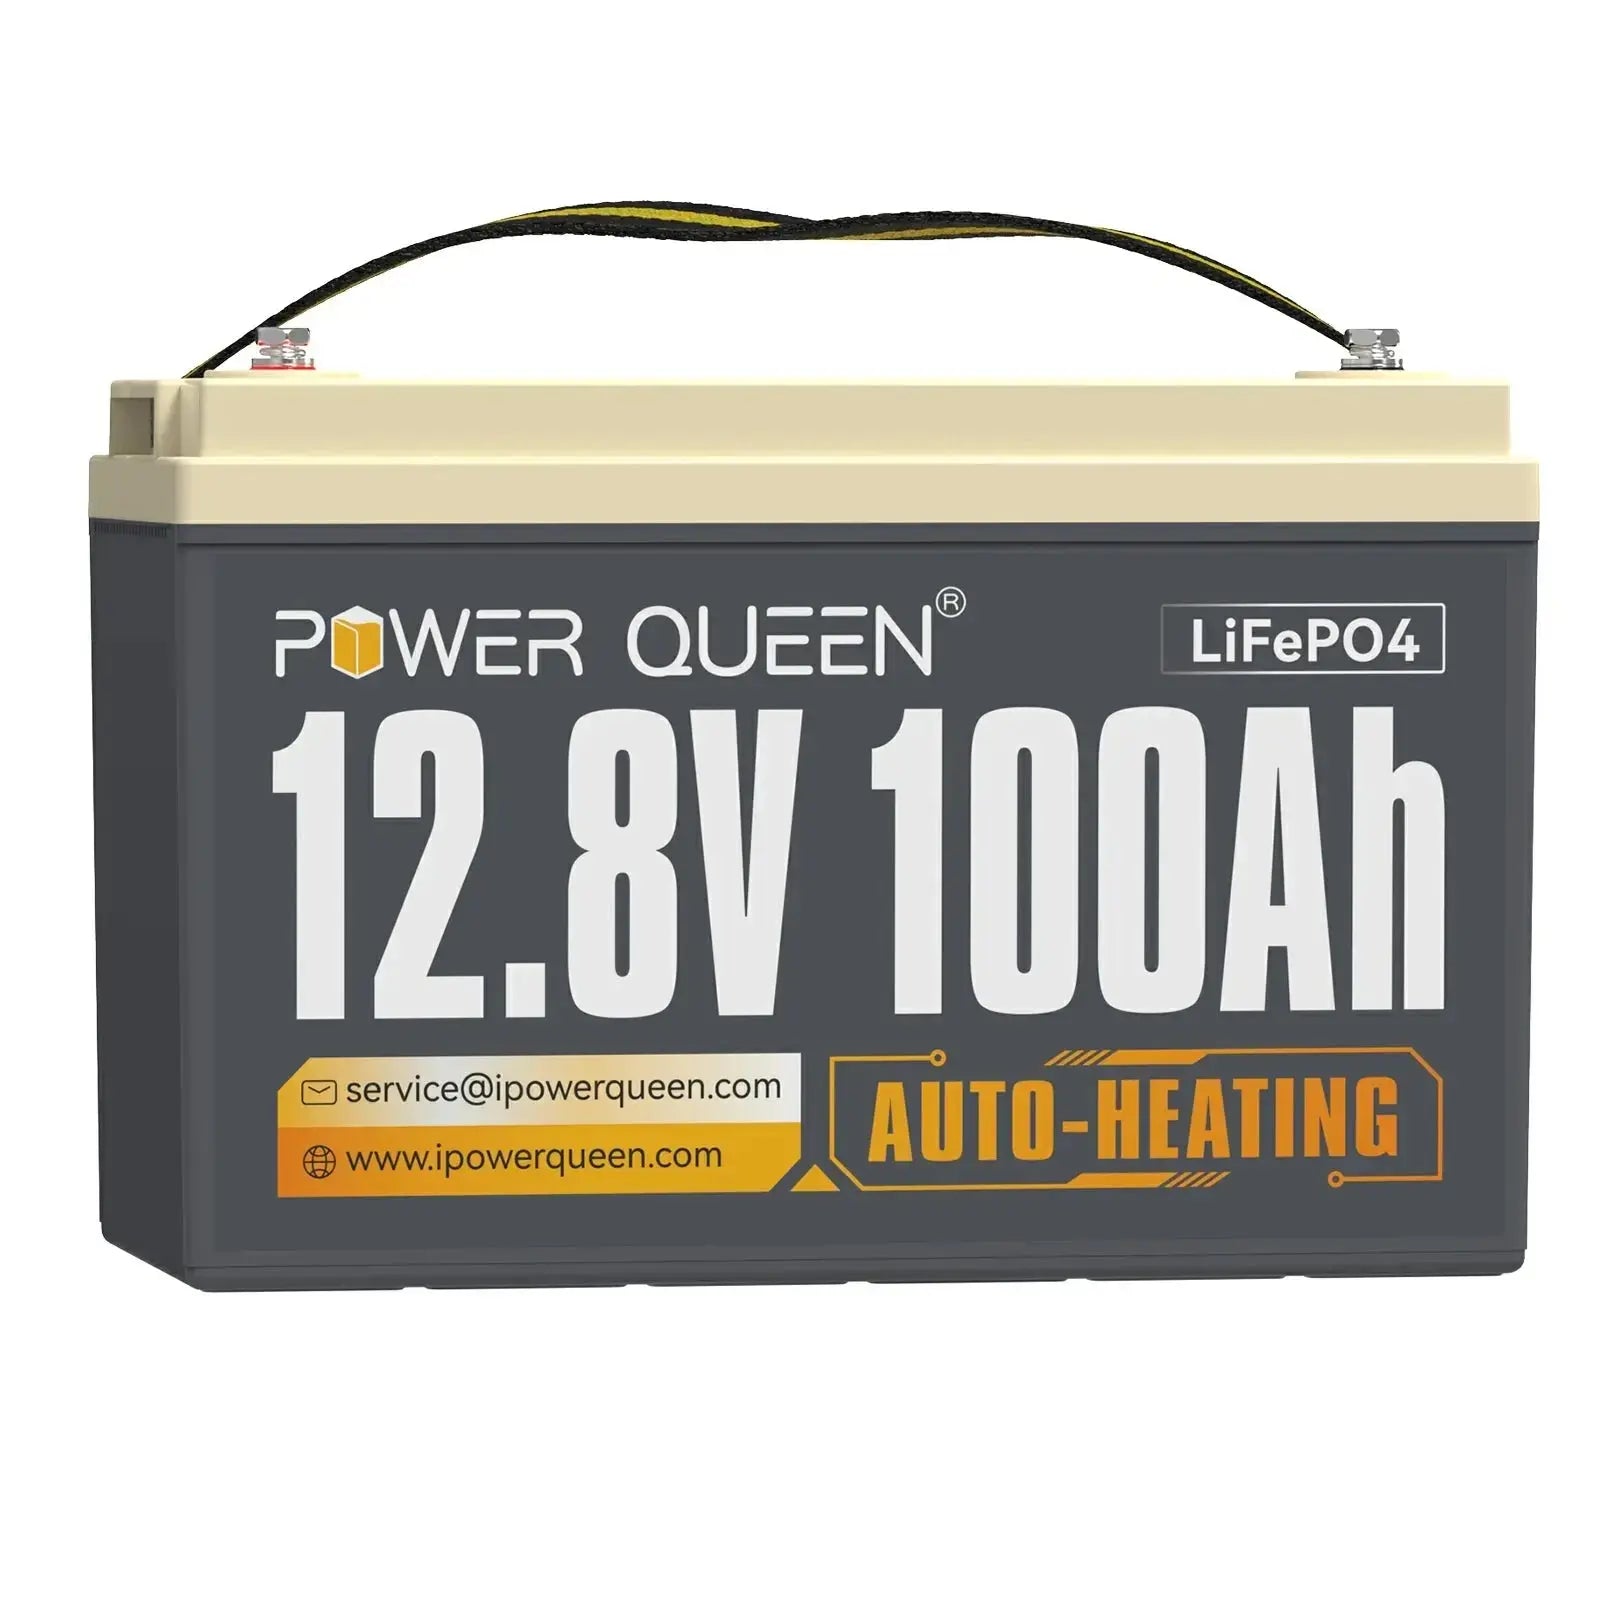 Power Queen 12.8V 100Ah Self-Heating LiFePO4 Battery, Built-in 100A BMS Power Queen